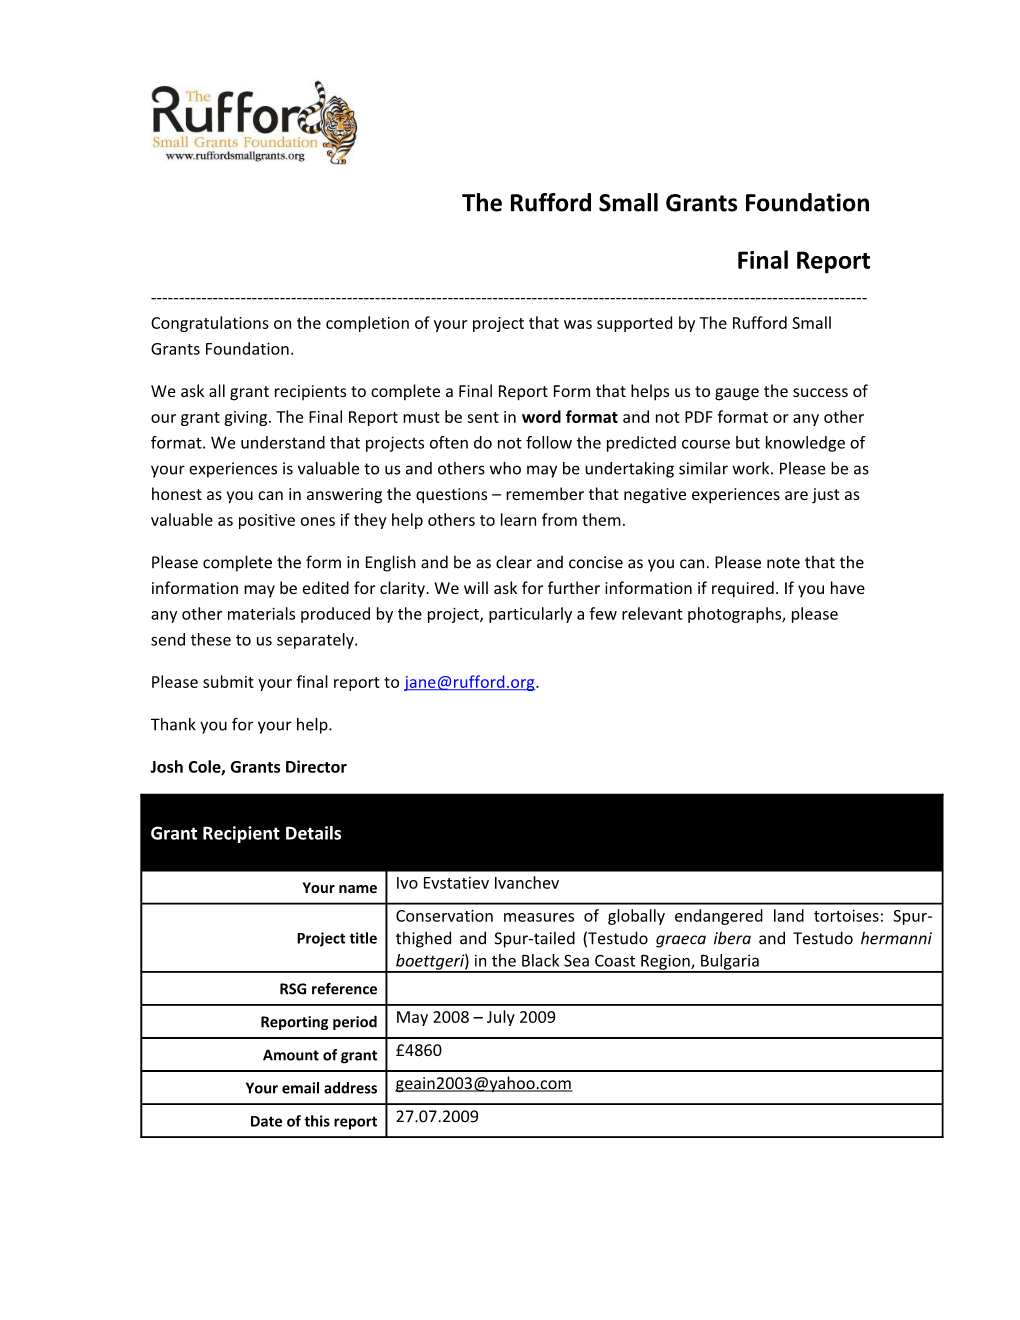 The Rufford Small Grants Foundation s16